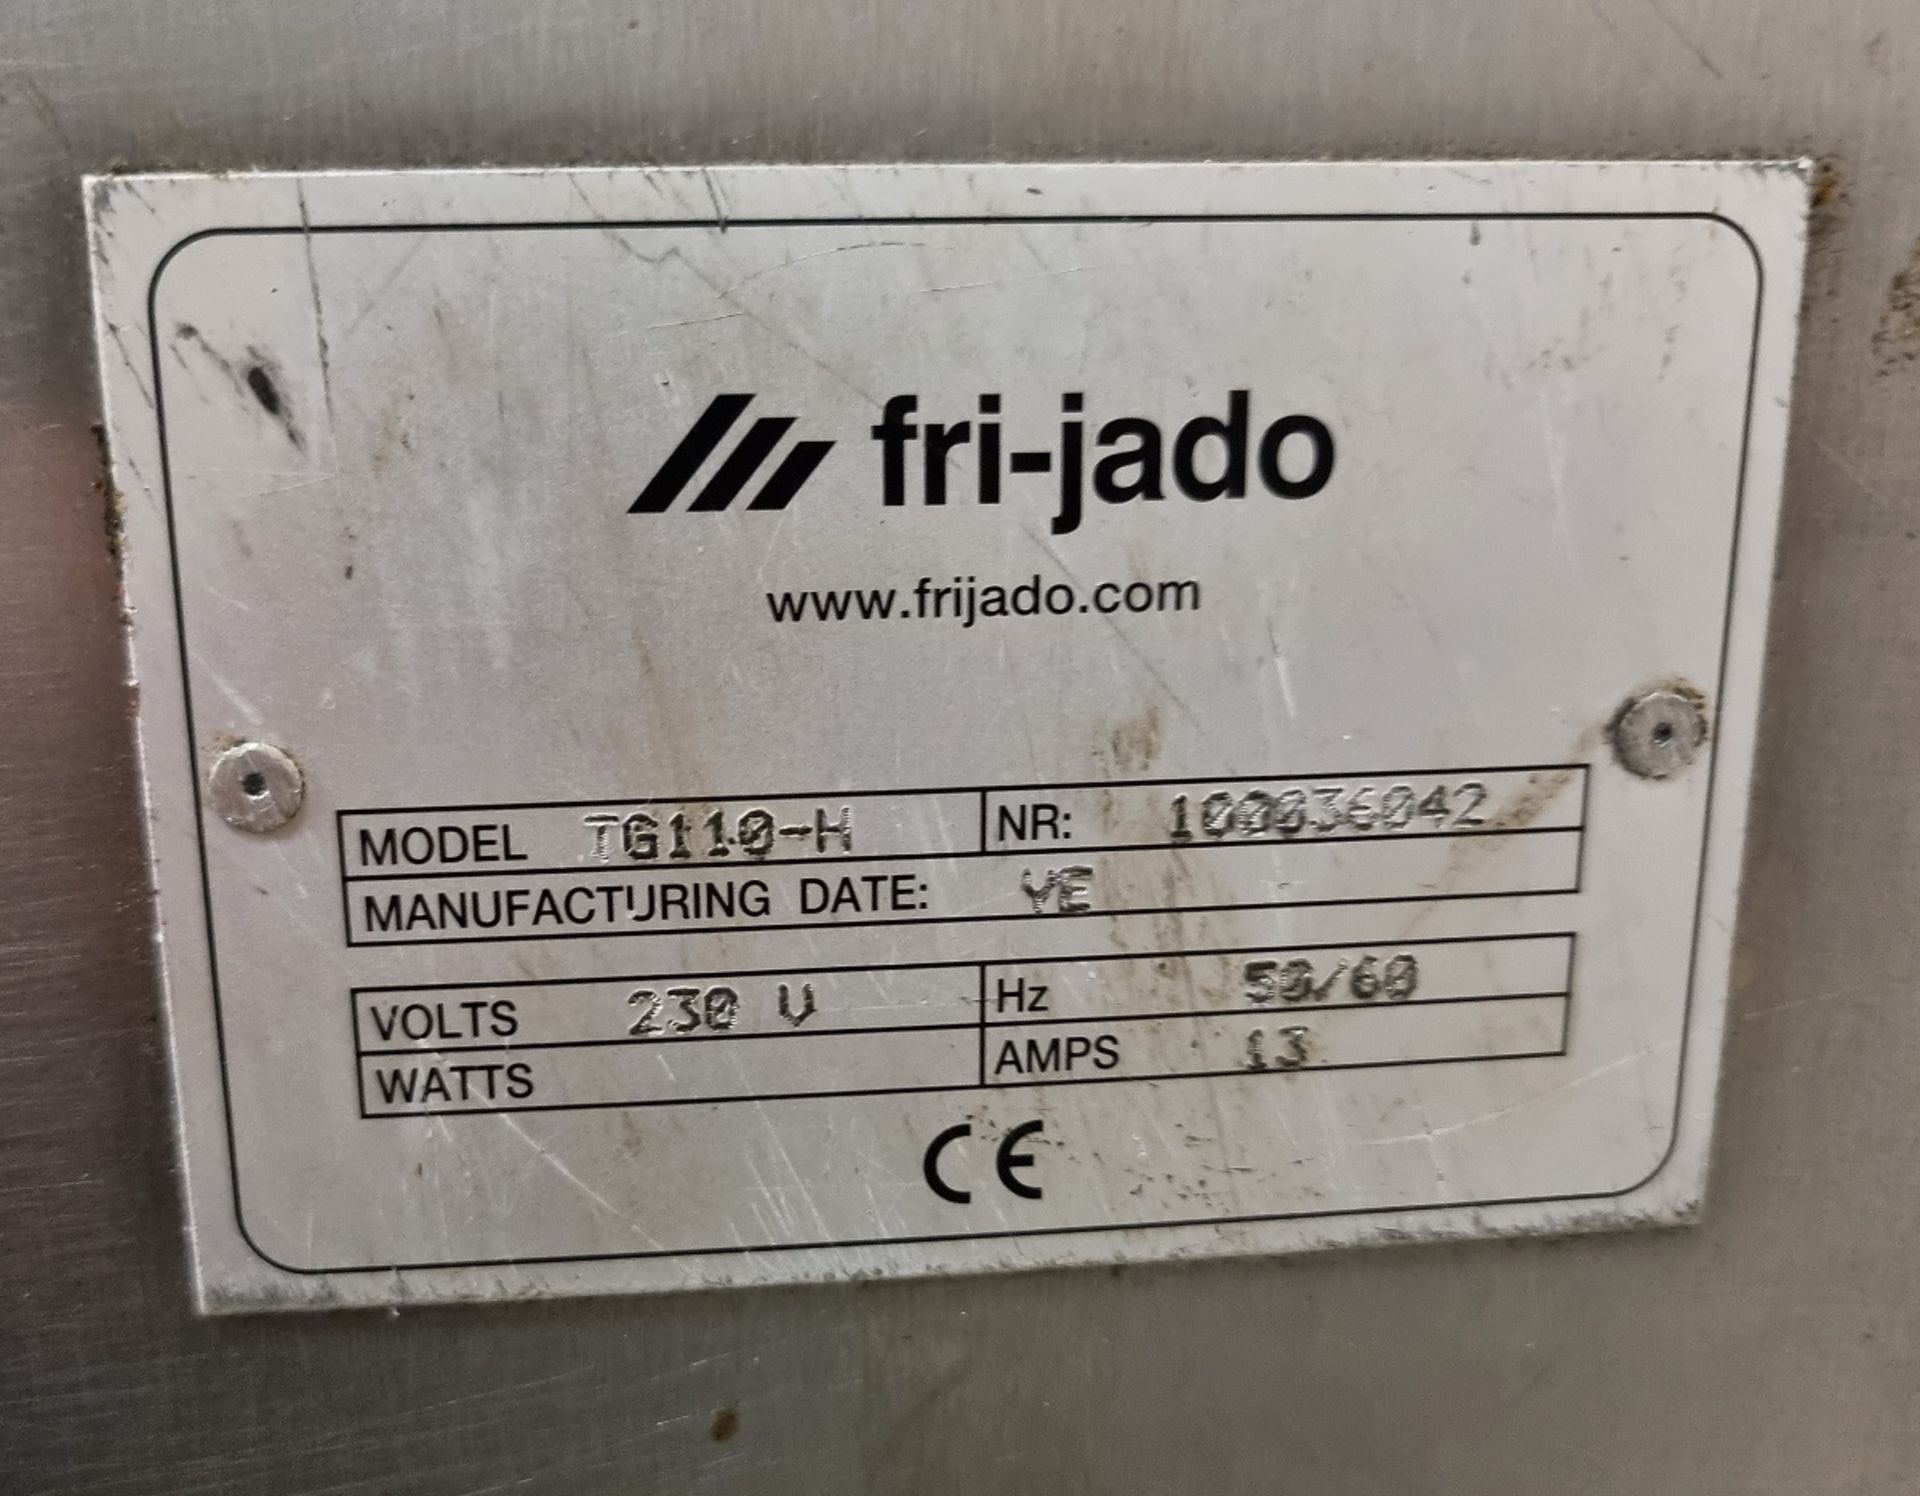 Fri-Jado TG110-M electric rotisserie oven - 84x55x75cm - Image 5 of 7